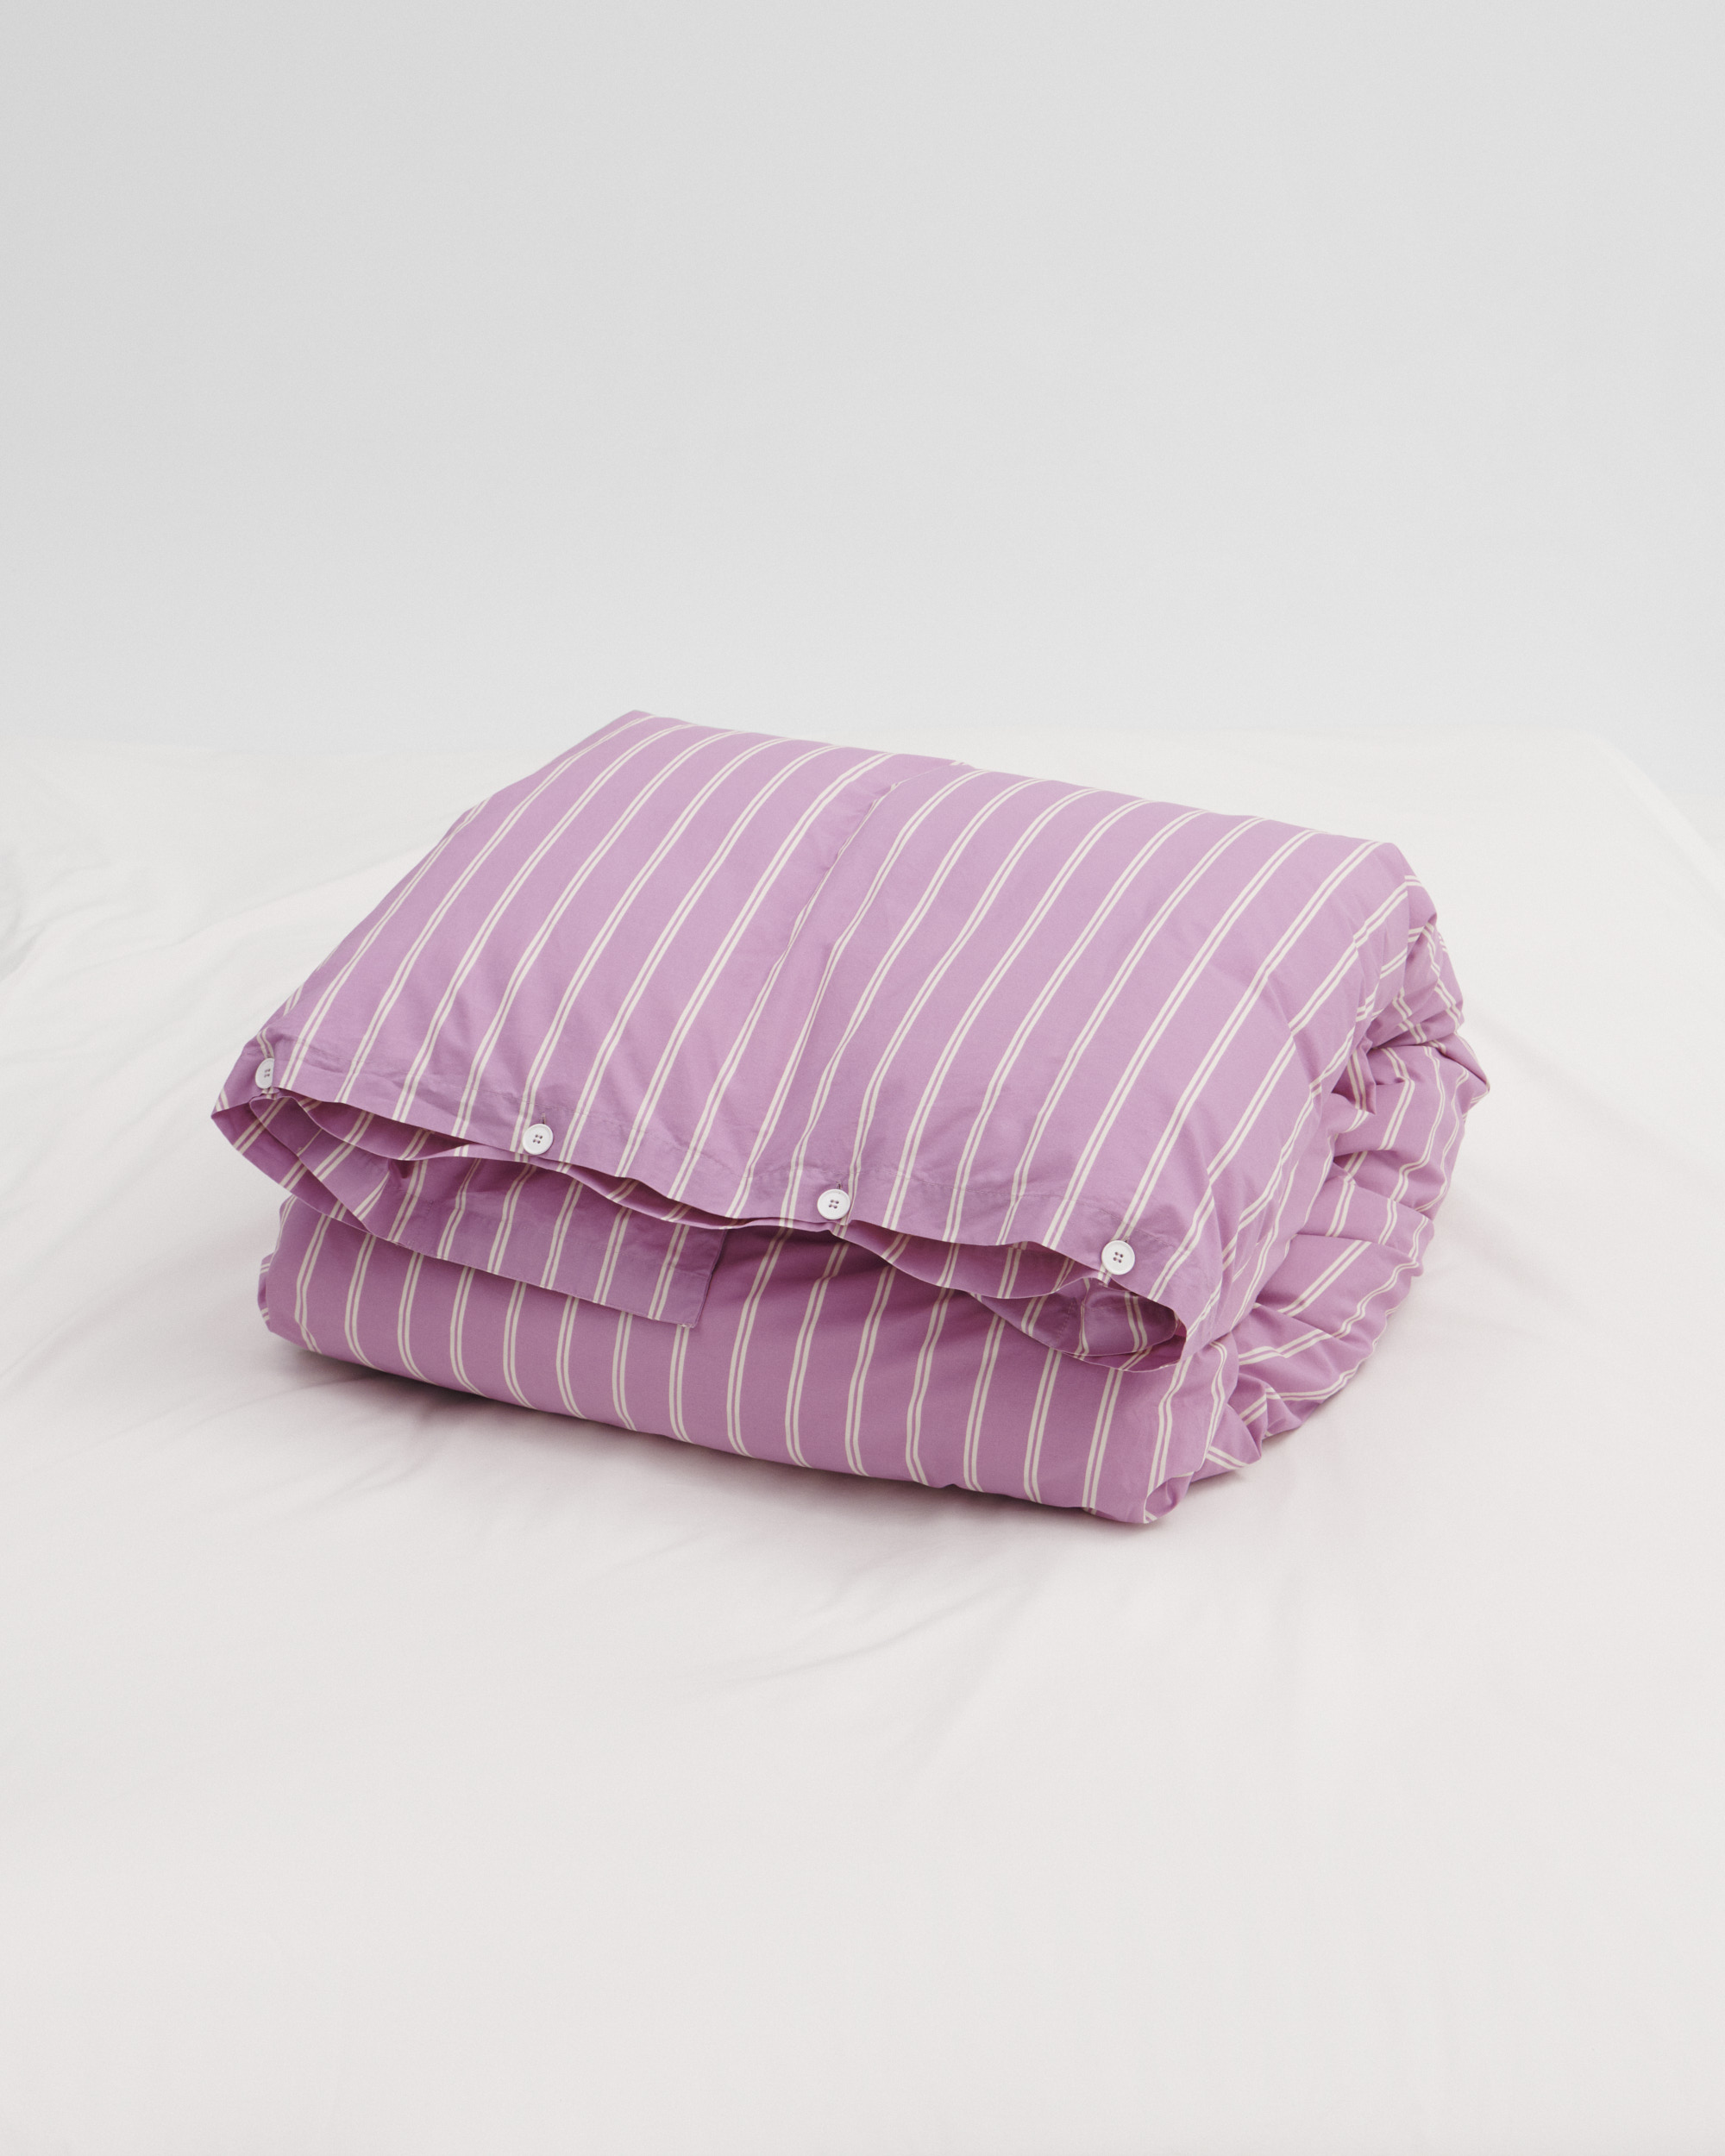 Percale bedding | Tekla Fabrics